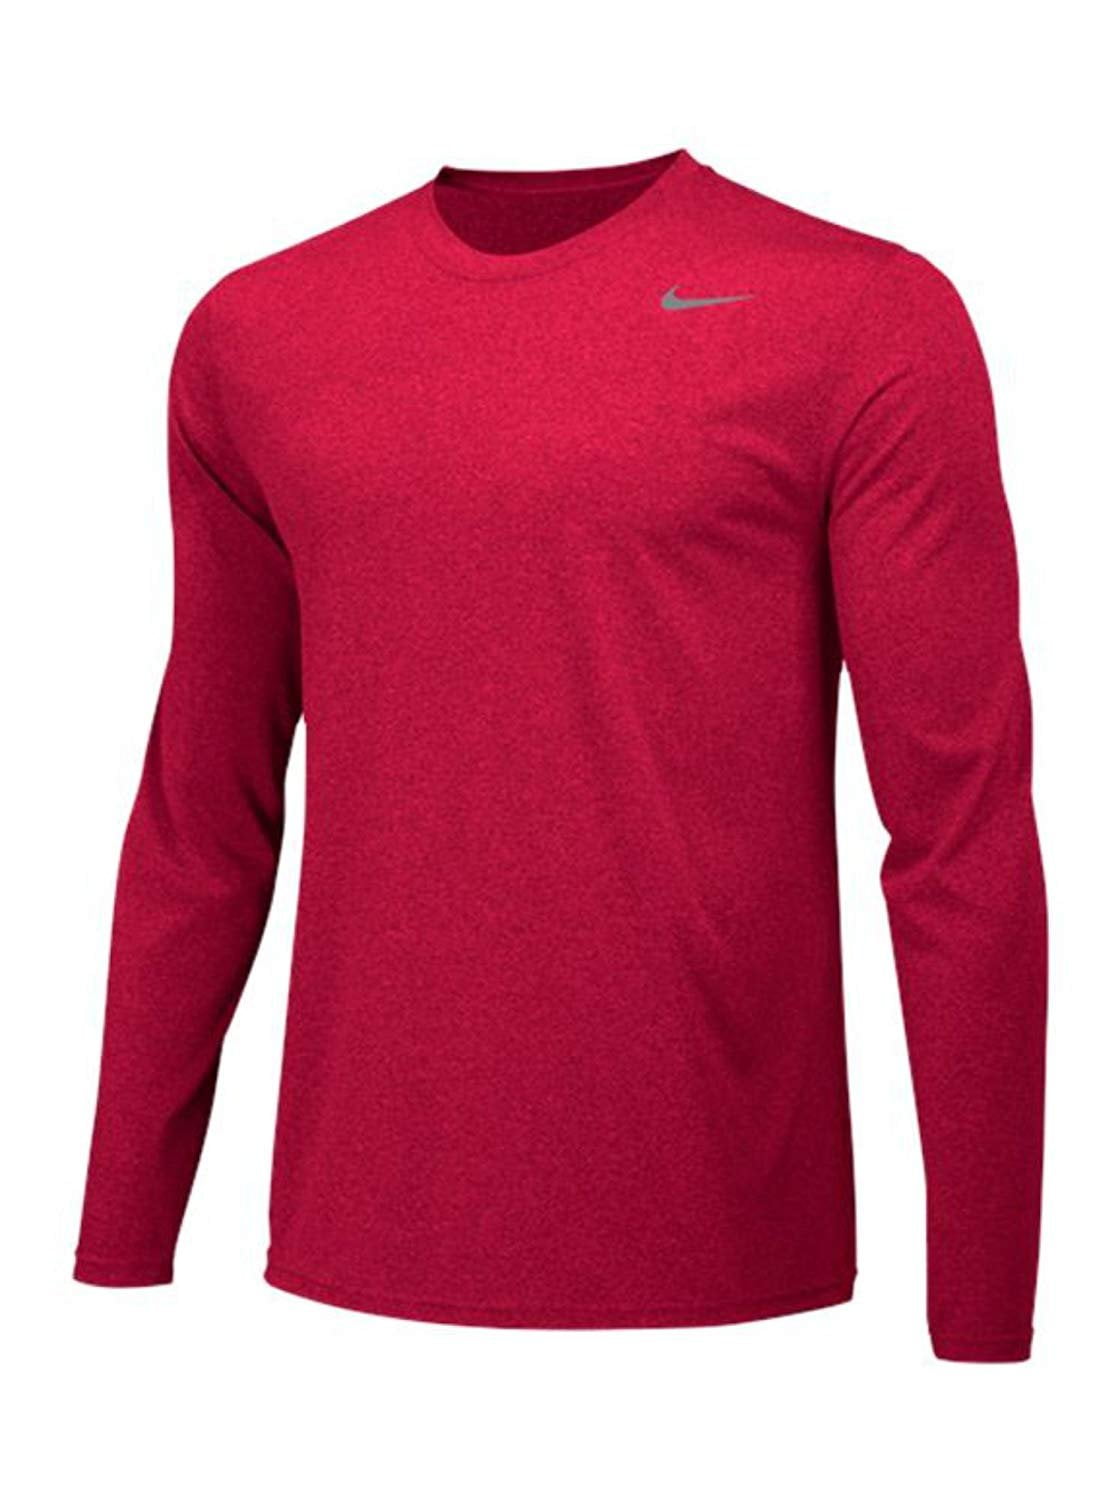 Nike Men\'s Team Legend Long Sleeve Training Top - University RED/Cool Grey  - 727980-657 - SZ. X-Large